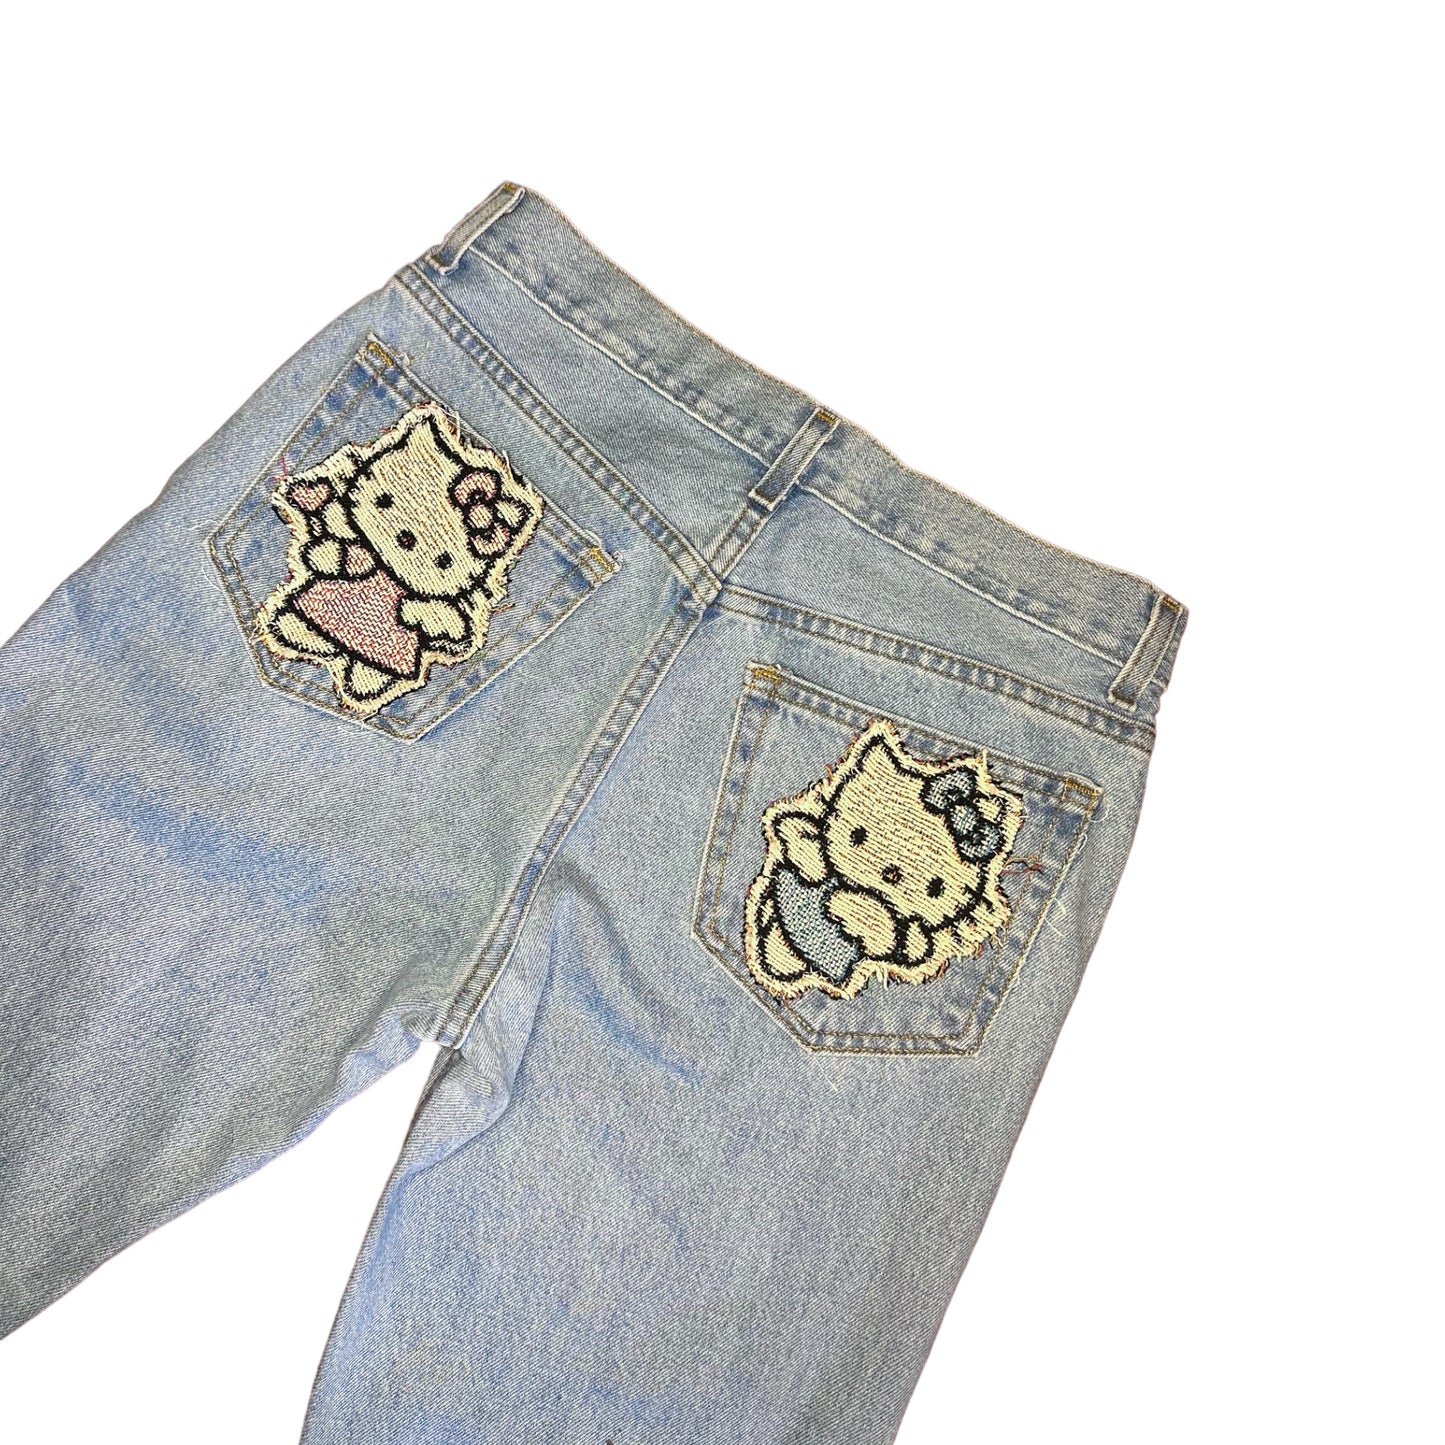 Hello Kitty Jeans